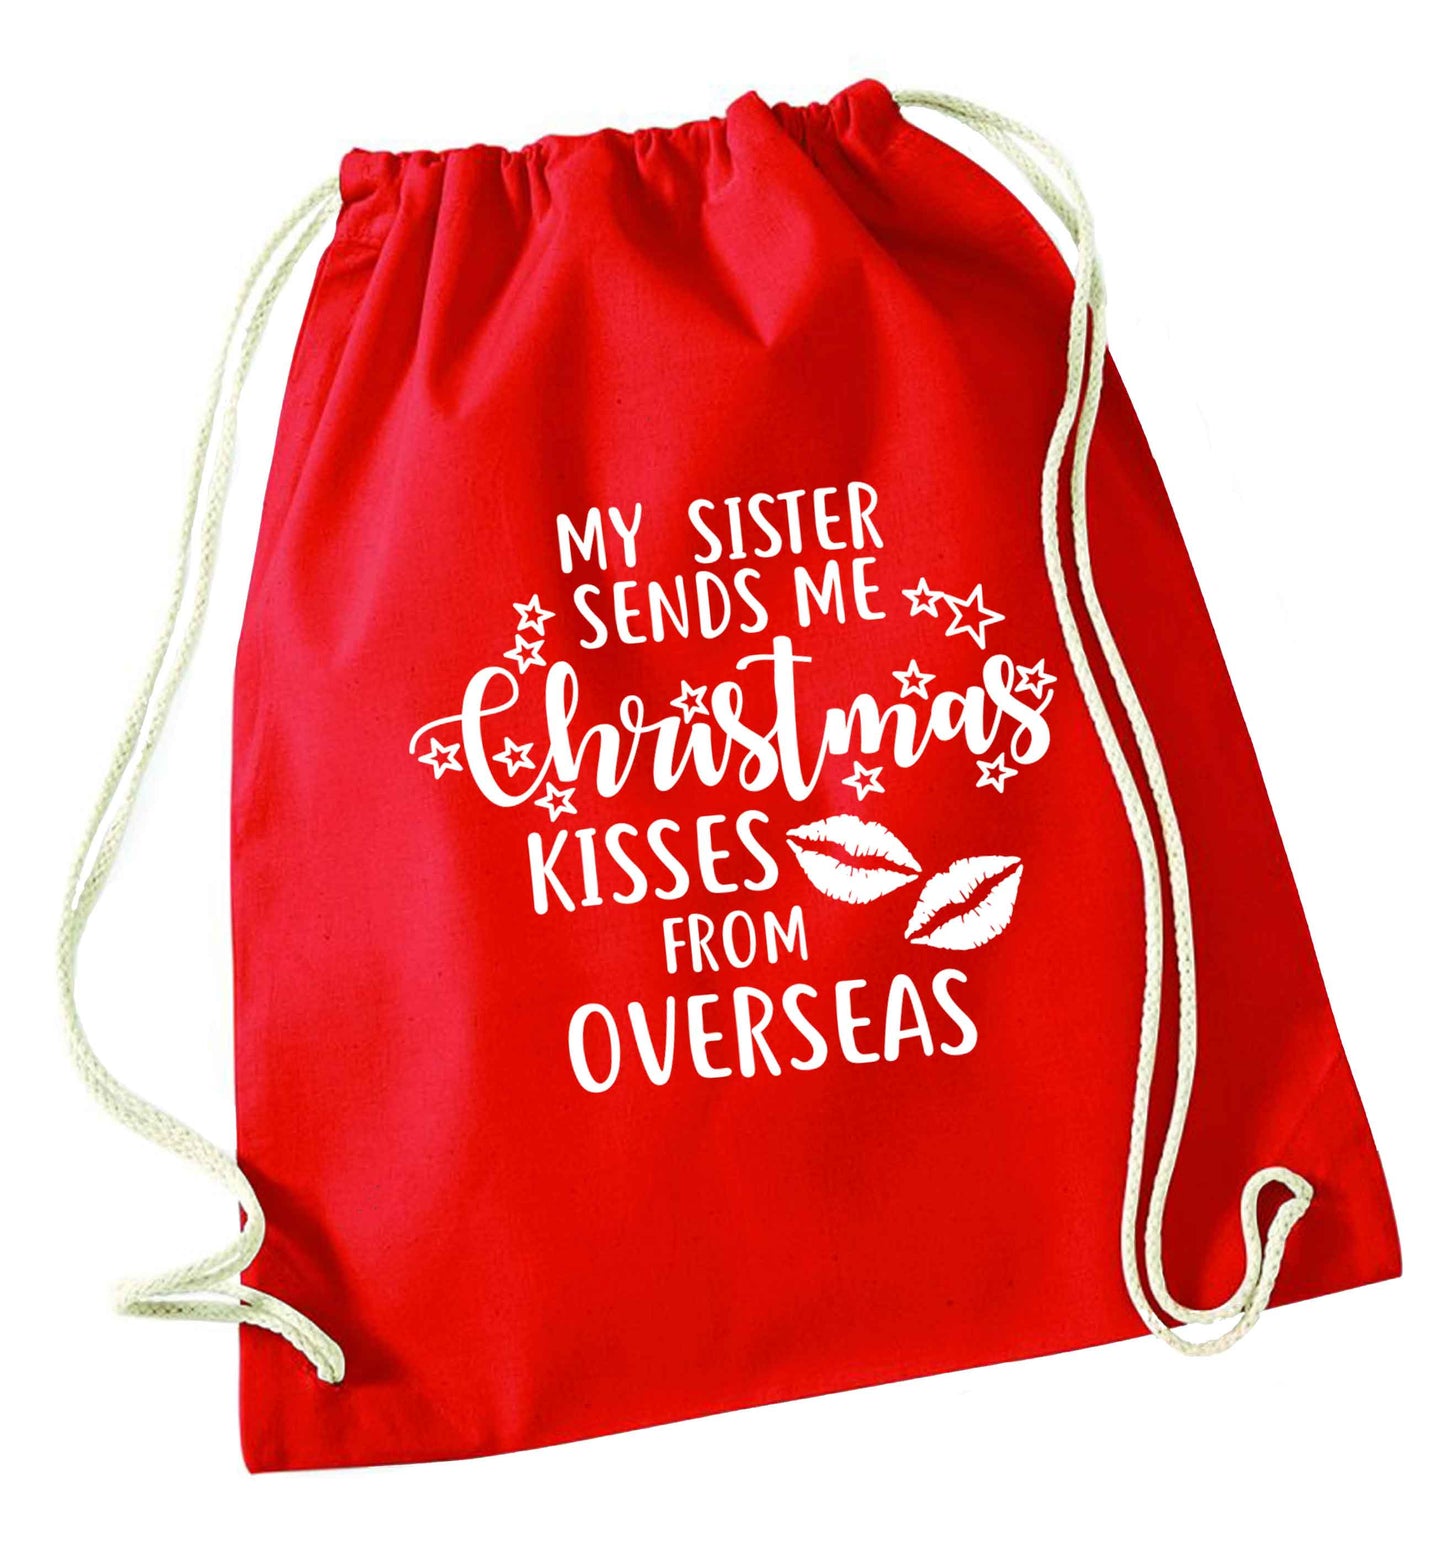 Grandad Christmas Kisses Overseas red drawstring bag 